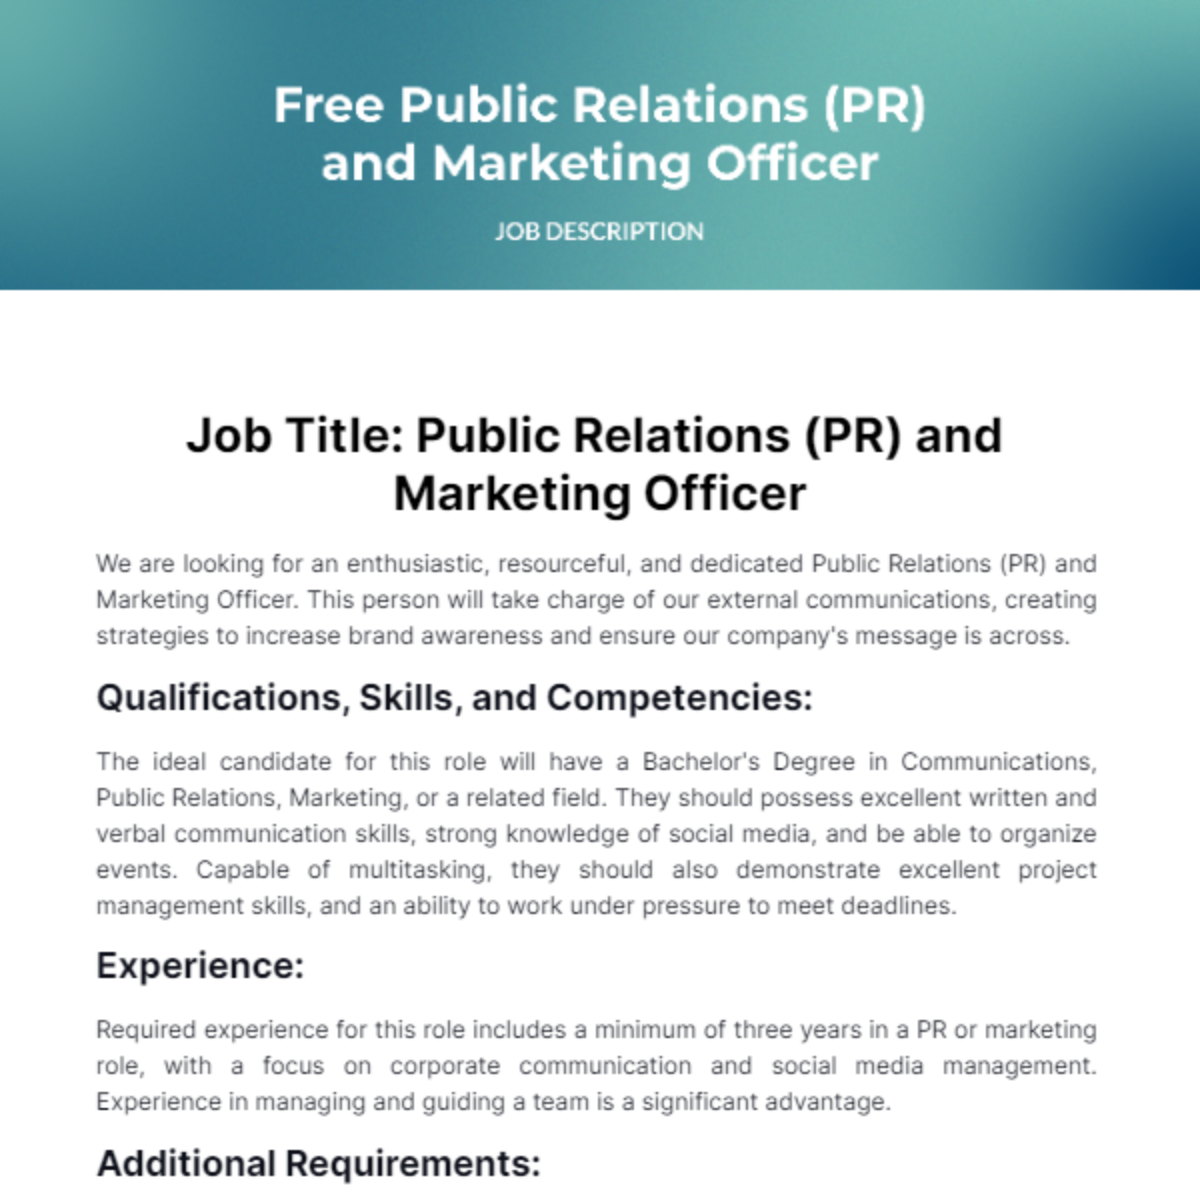 Public Relations (PR) and Marketing Officer Job Description Template